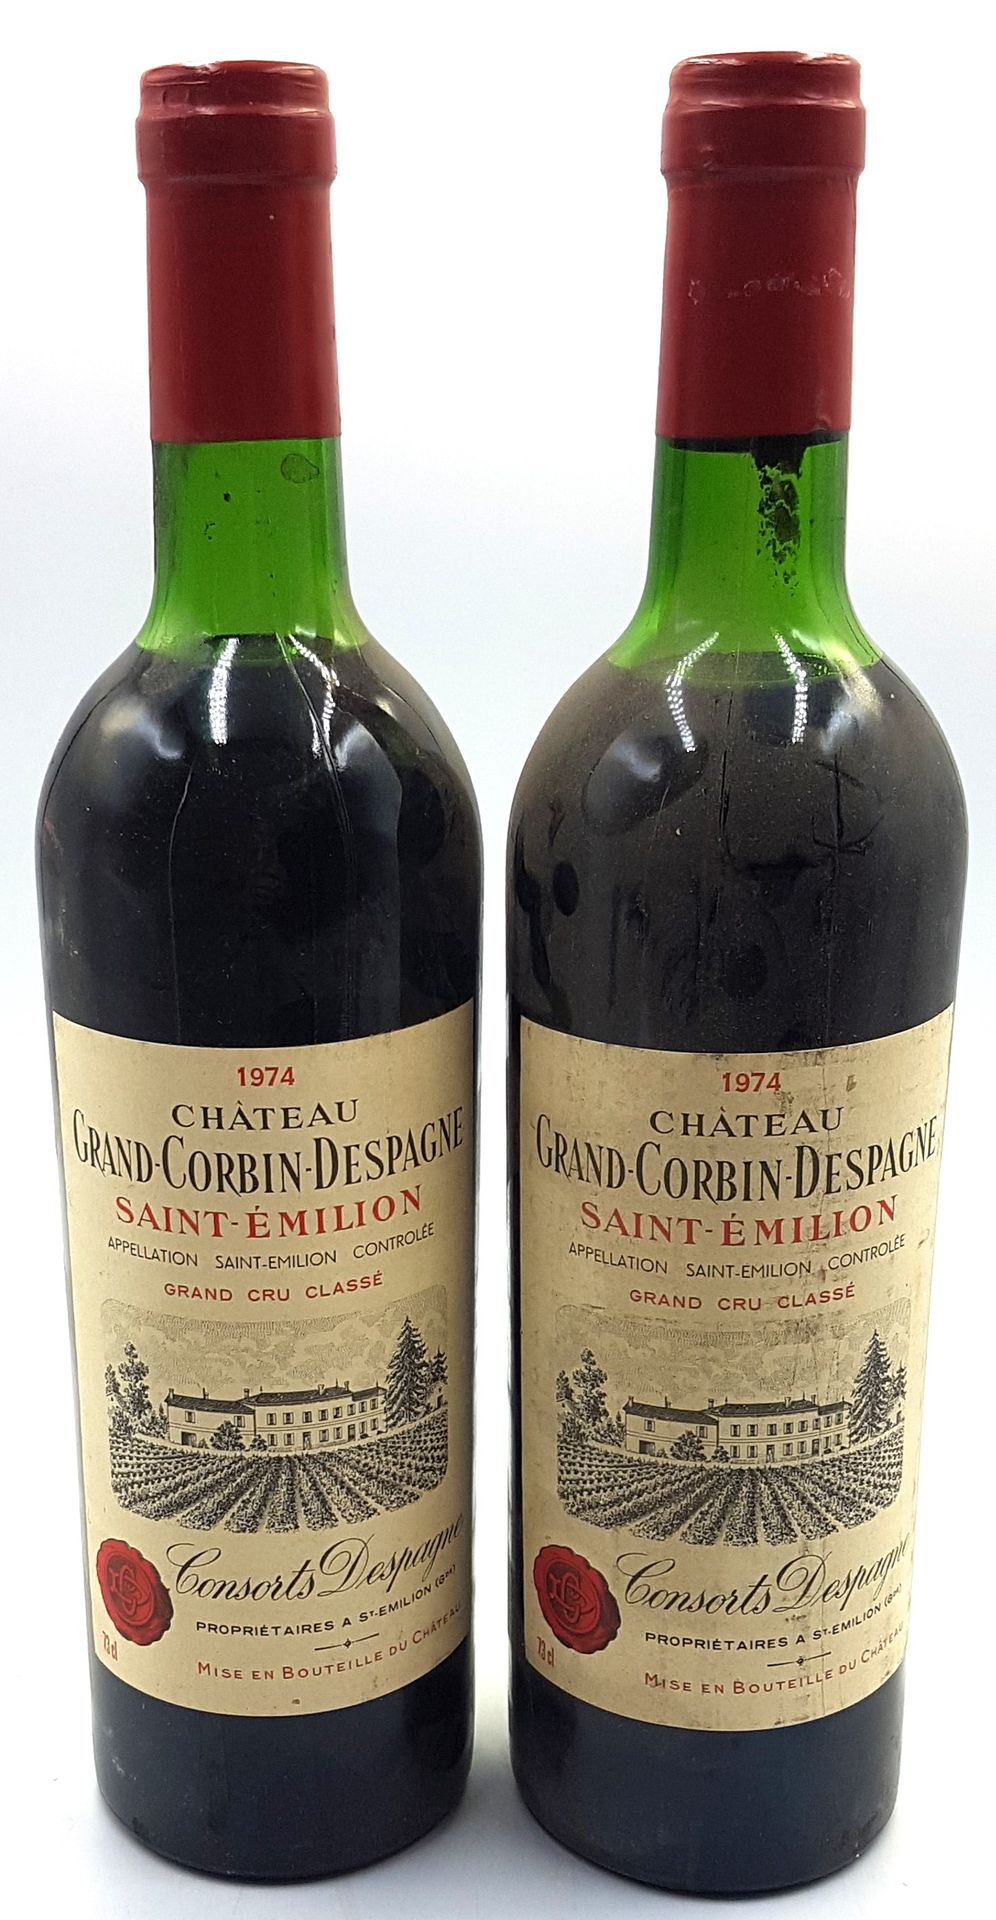 Null 圣埃米利永，Chateau Grand-Corbin-Despagne, 1974, 两瓶
(按原样出售）